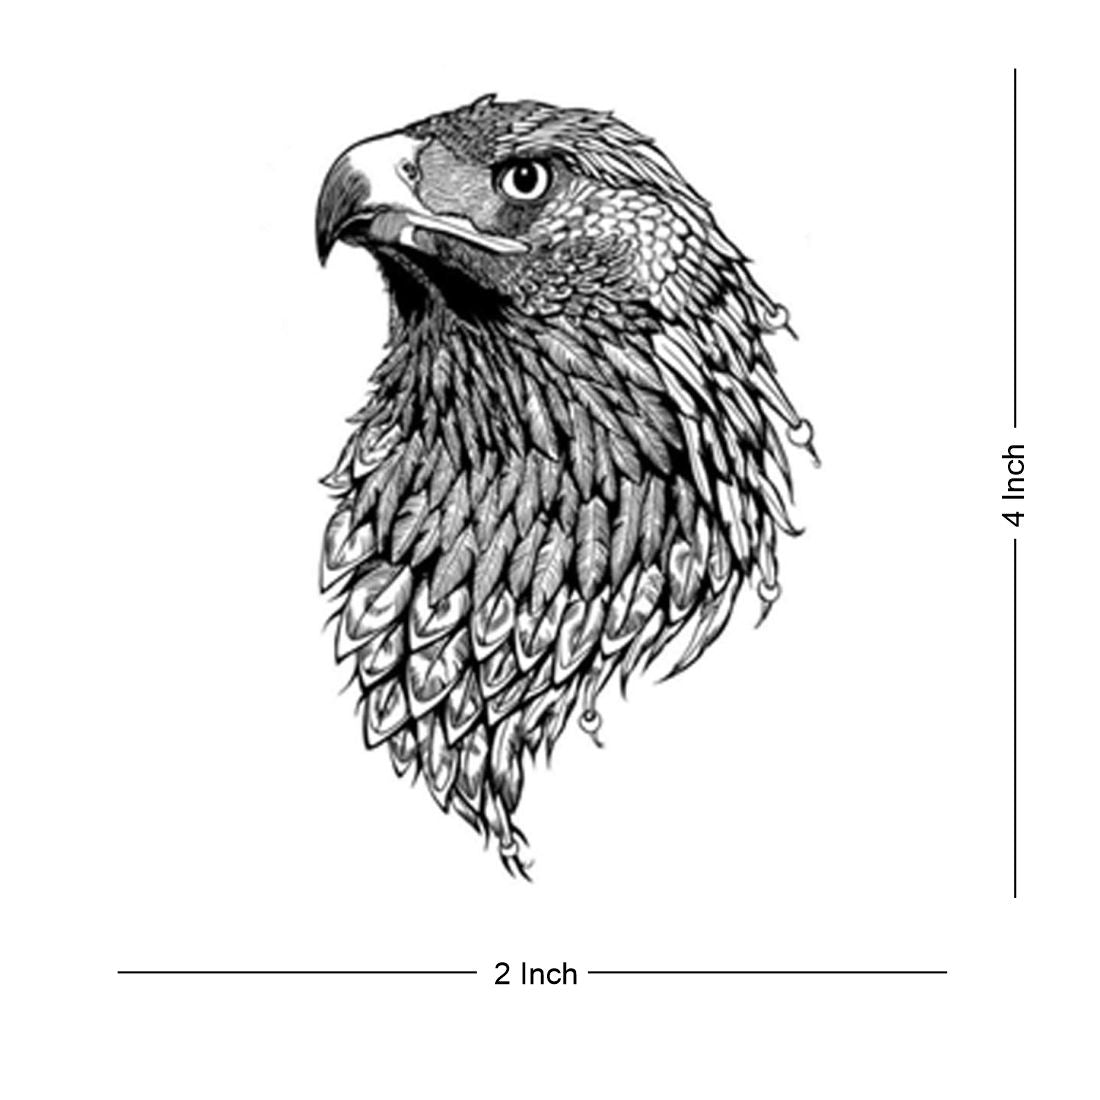 Eagle tattoo bundle design for t-shirt - Buy t-shirt designs